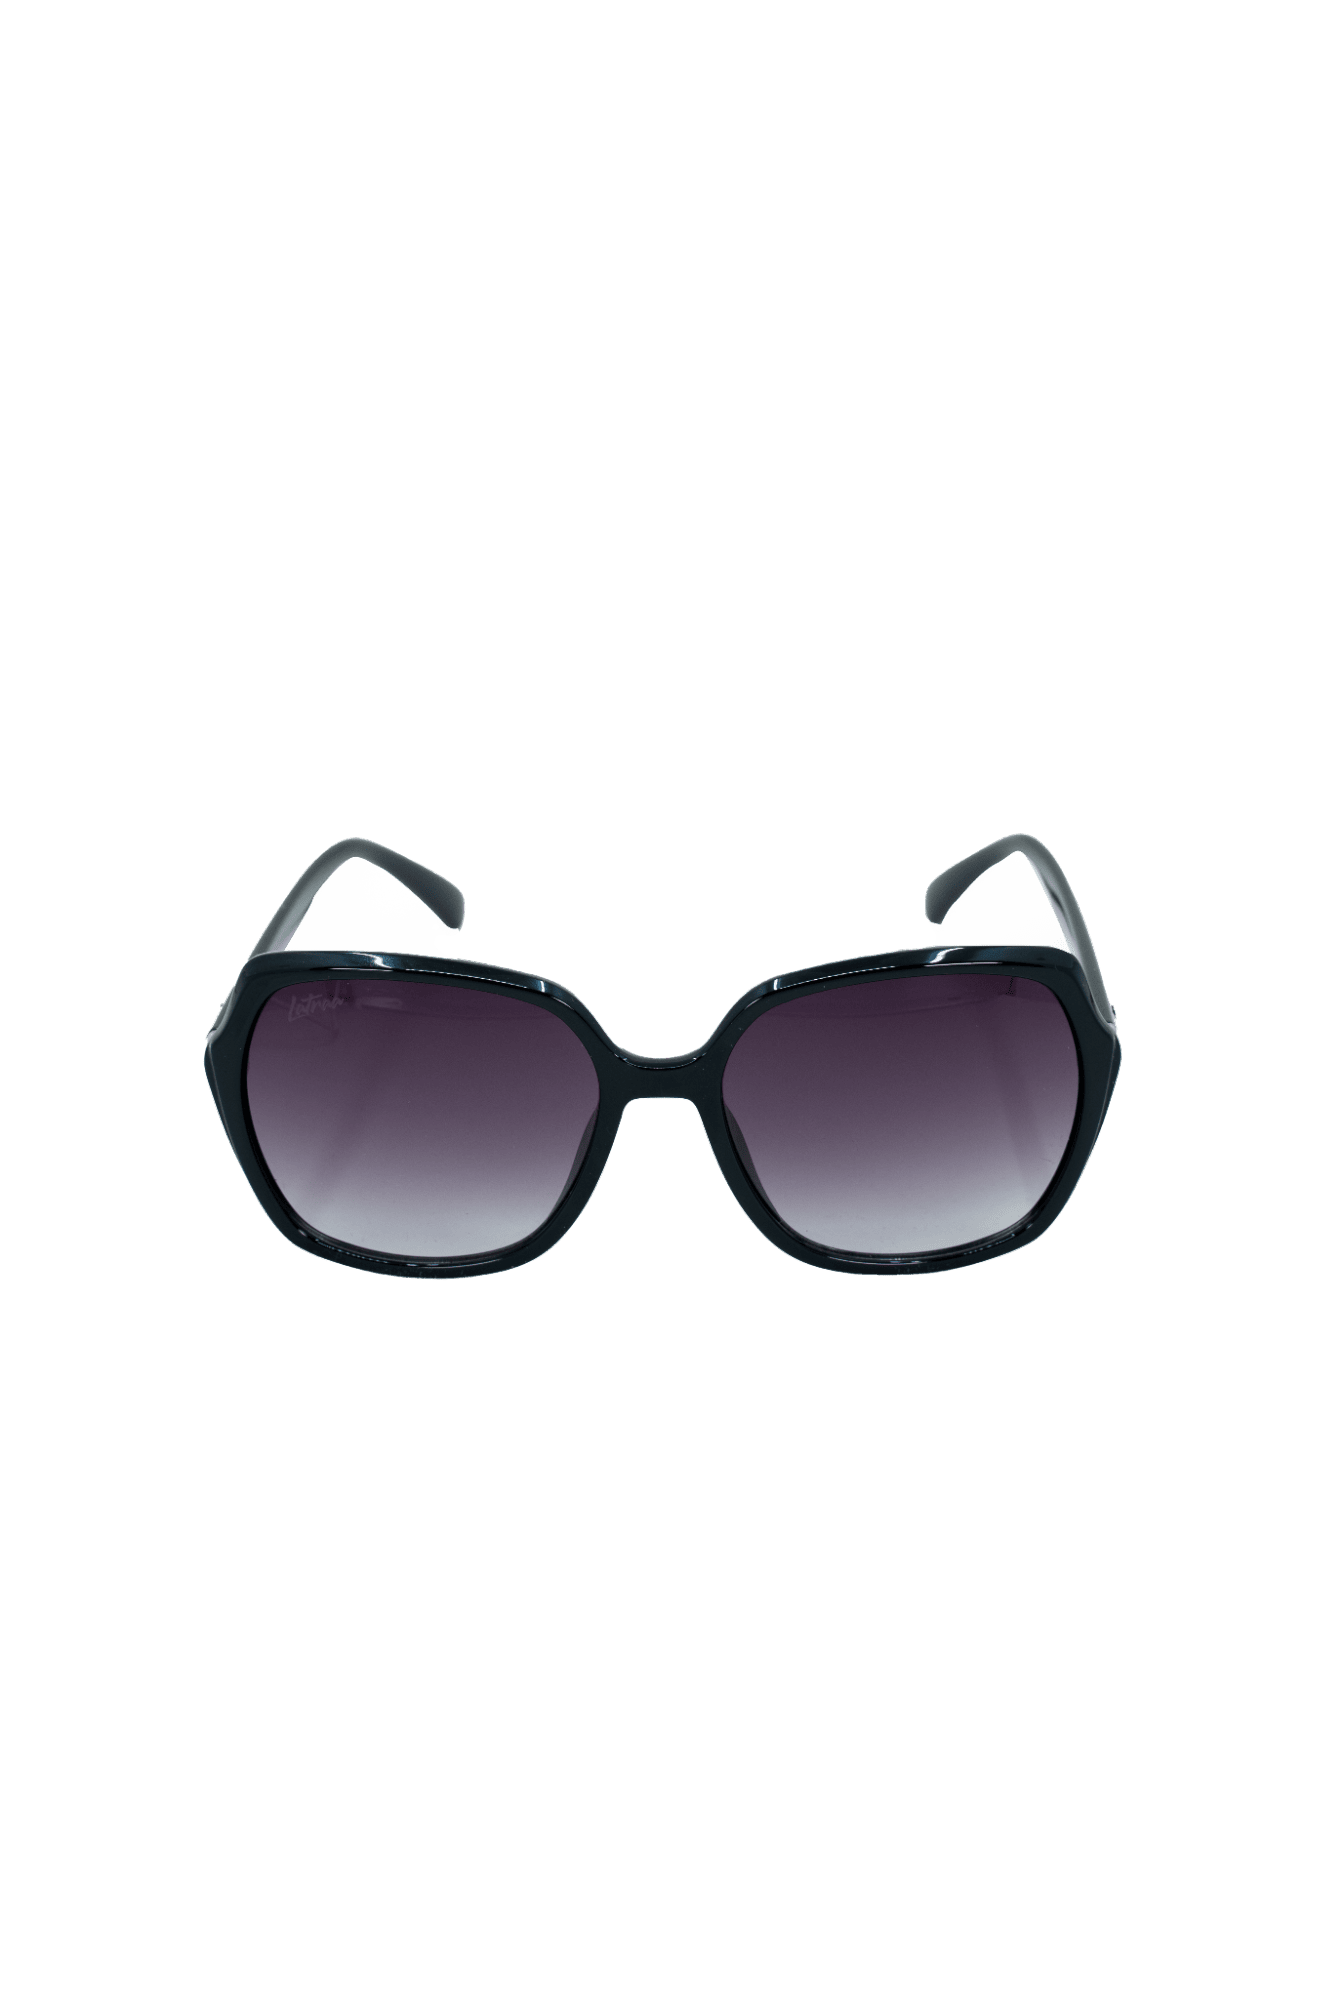 Sunglasses | Swimwear Online Dubai | Caha Capo